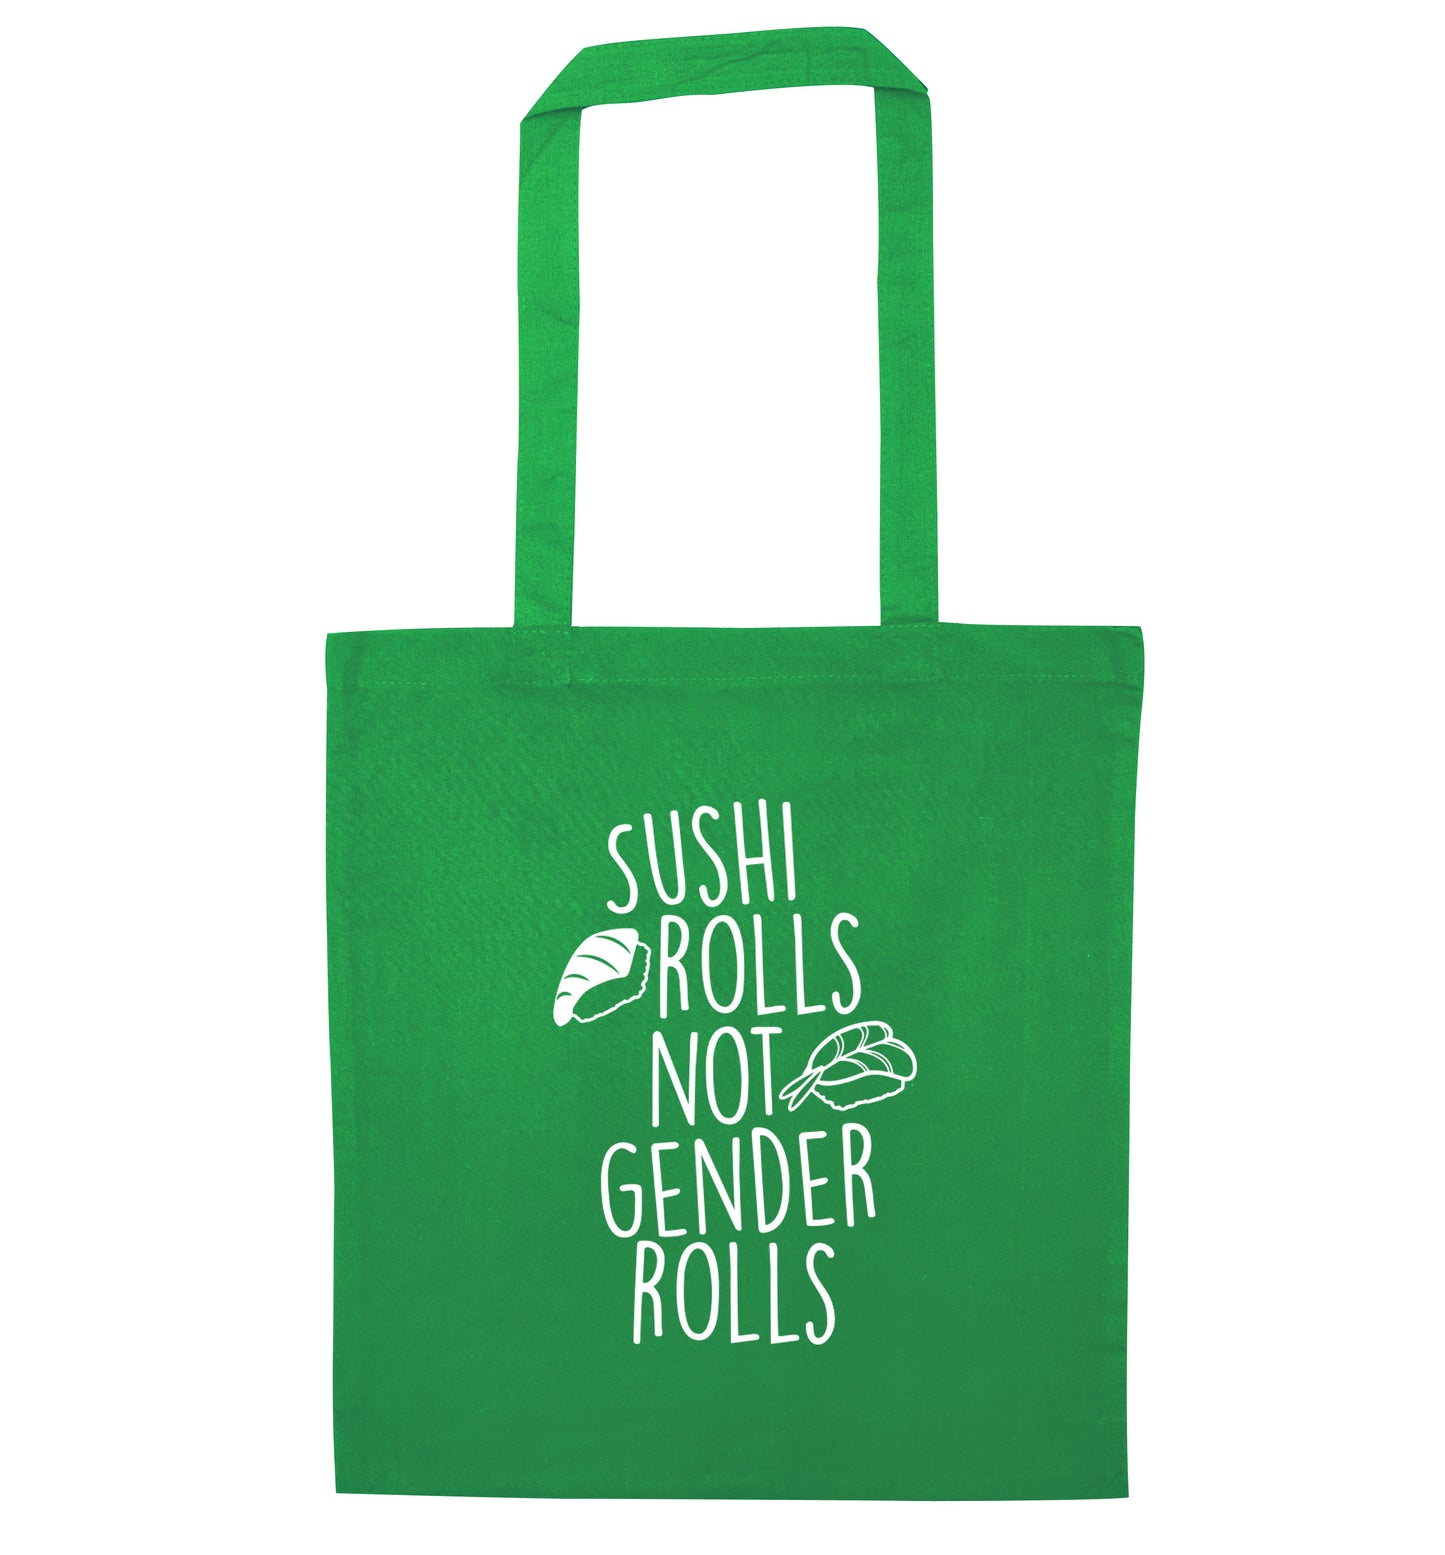 Sushi rolls not gender rolls green tote bag